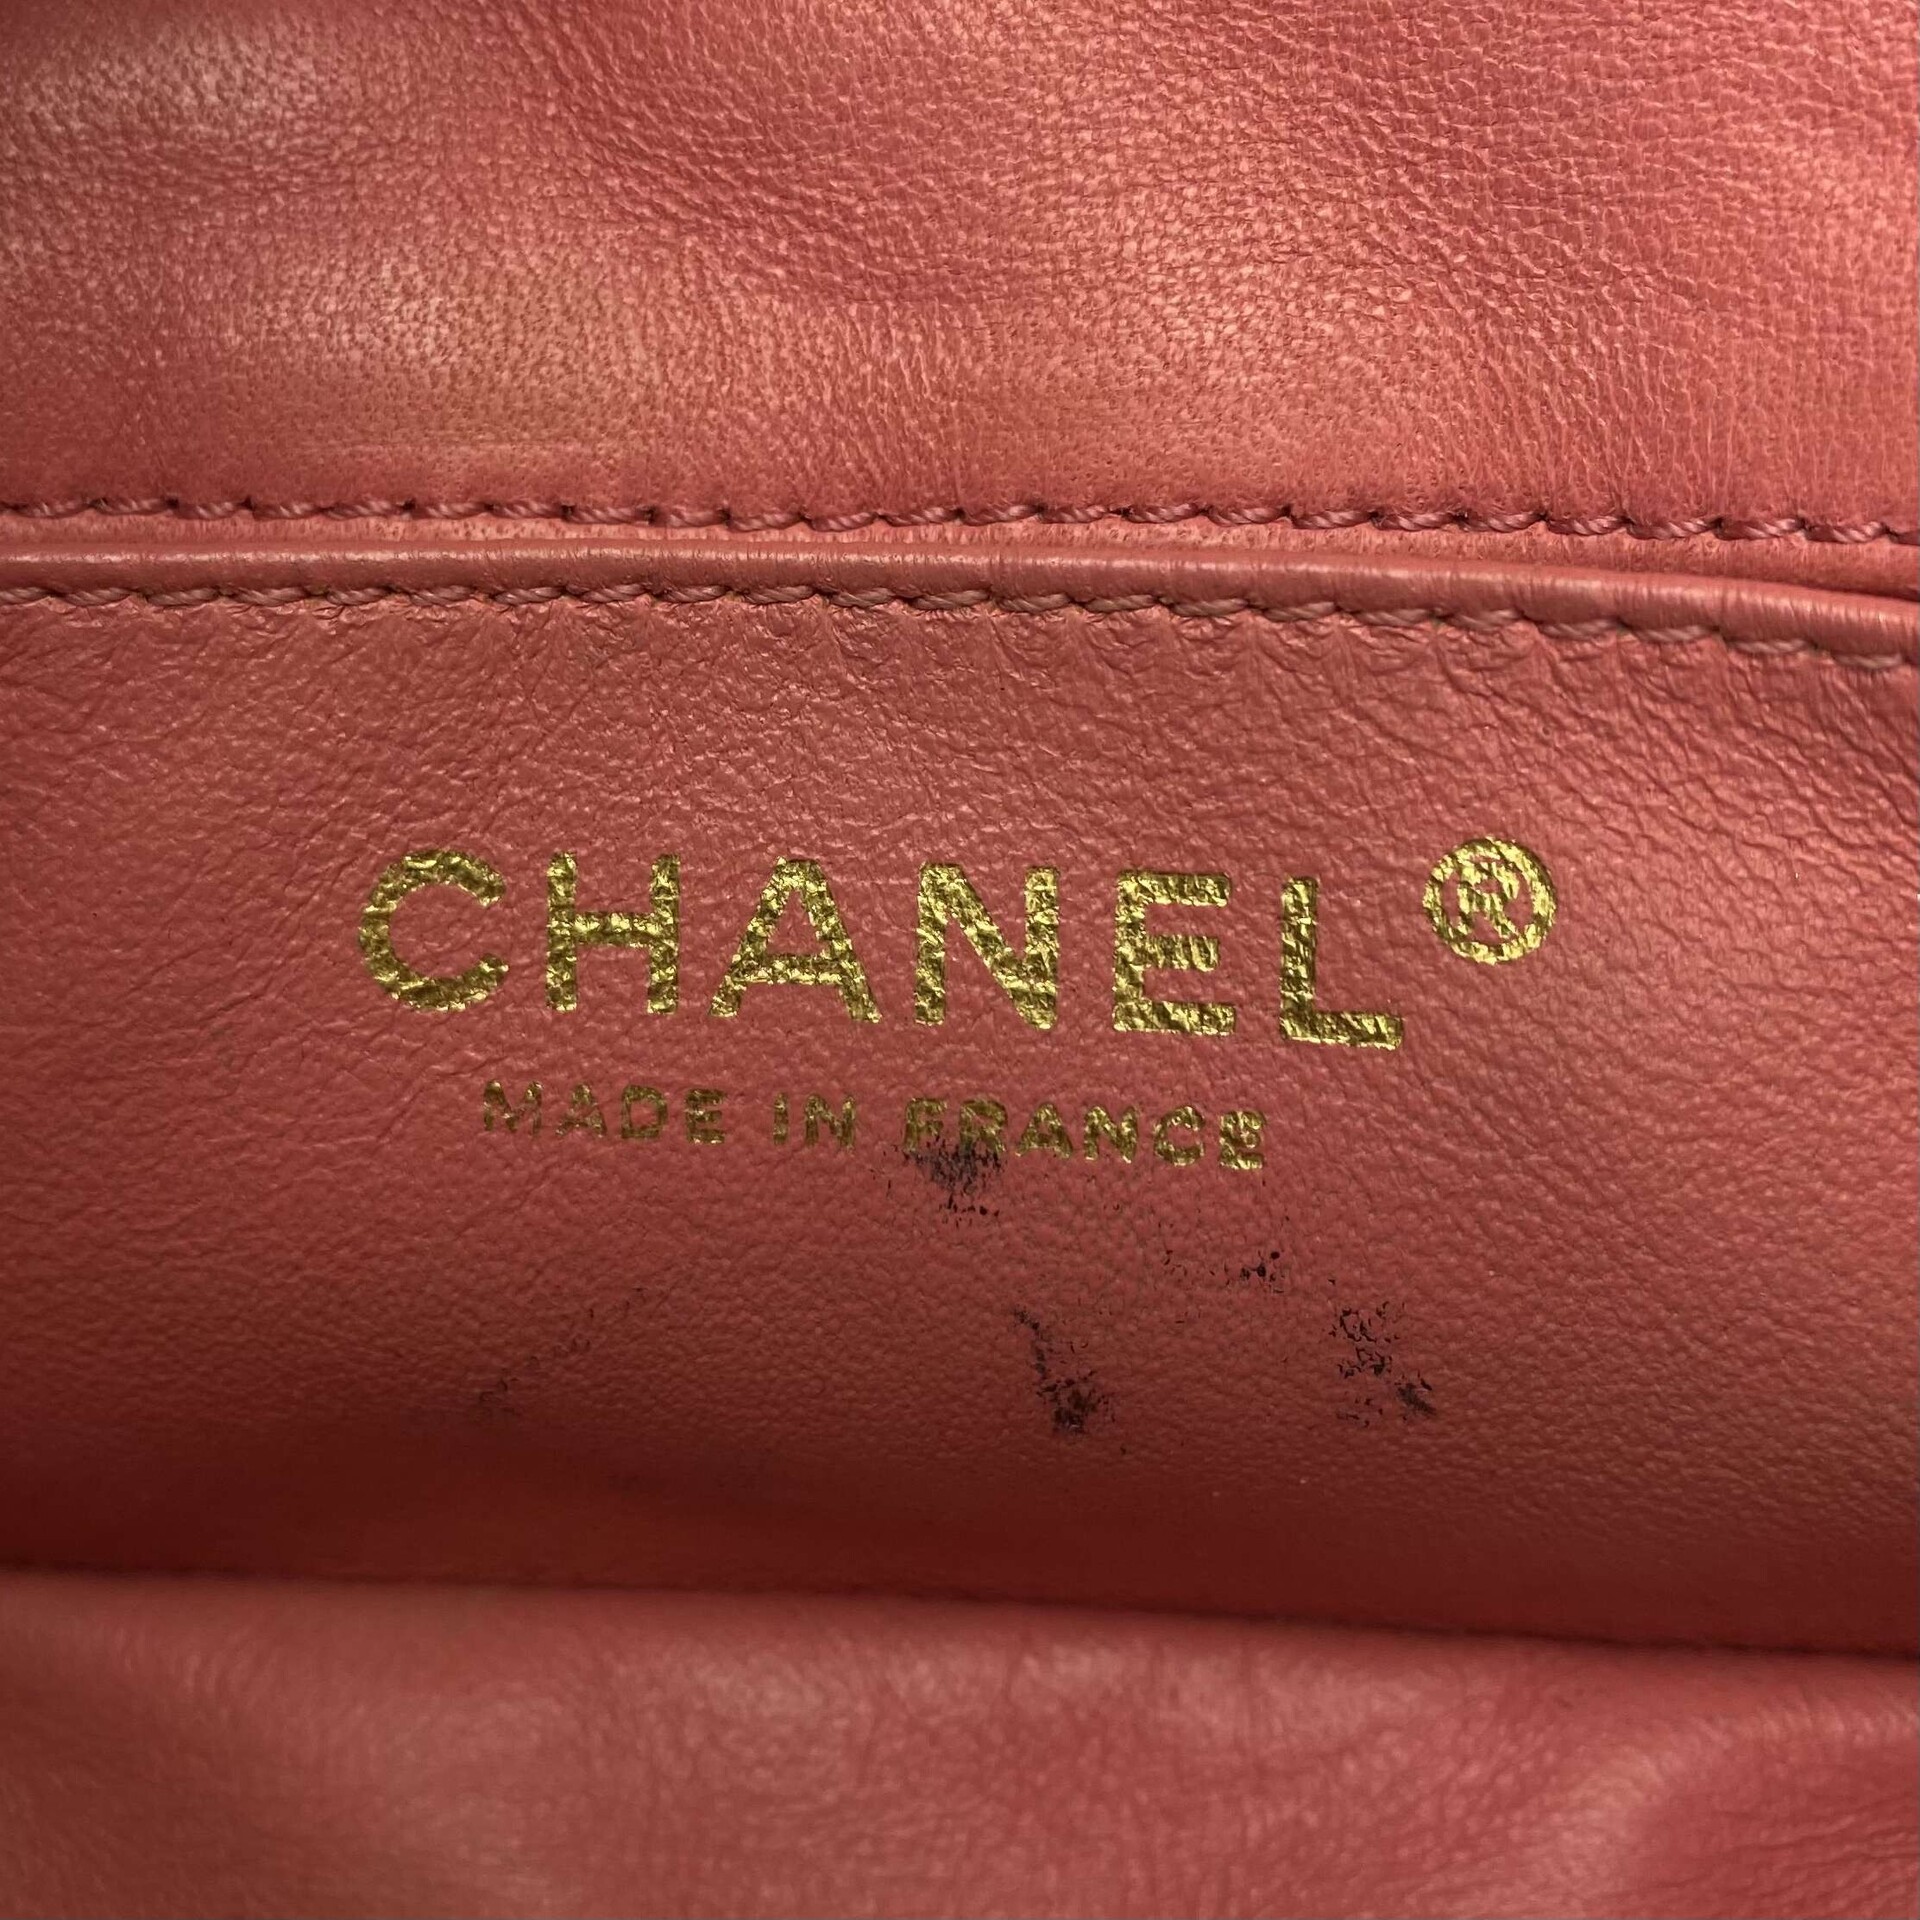 Bolsa Chanel Valentine Charm Flap Mini